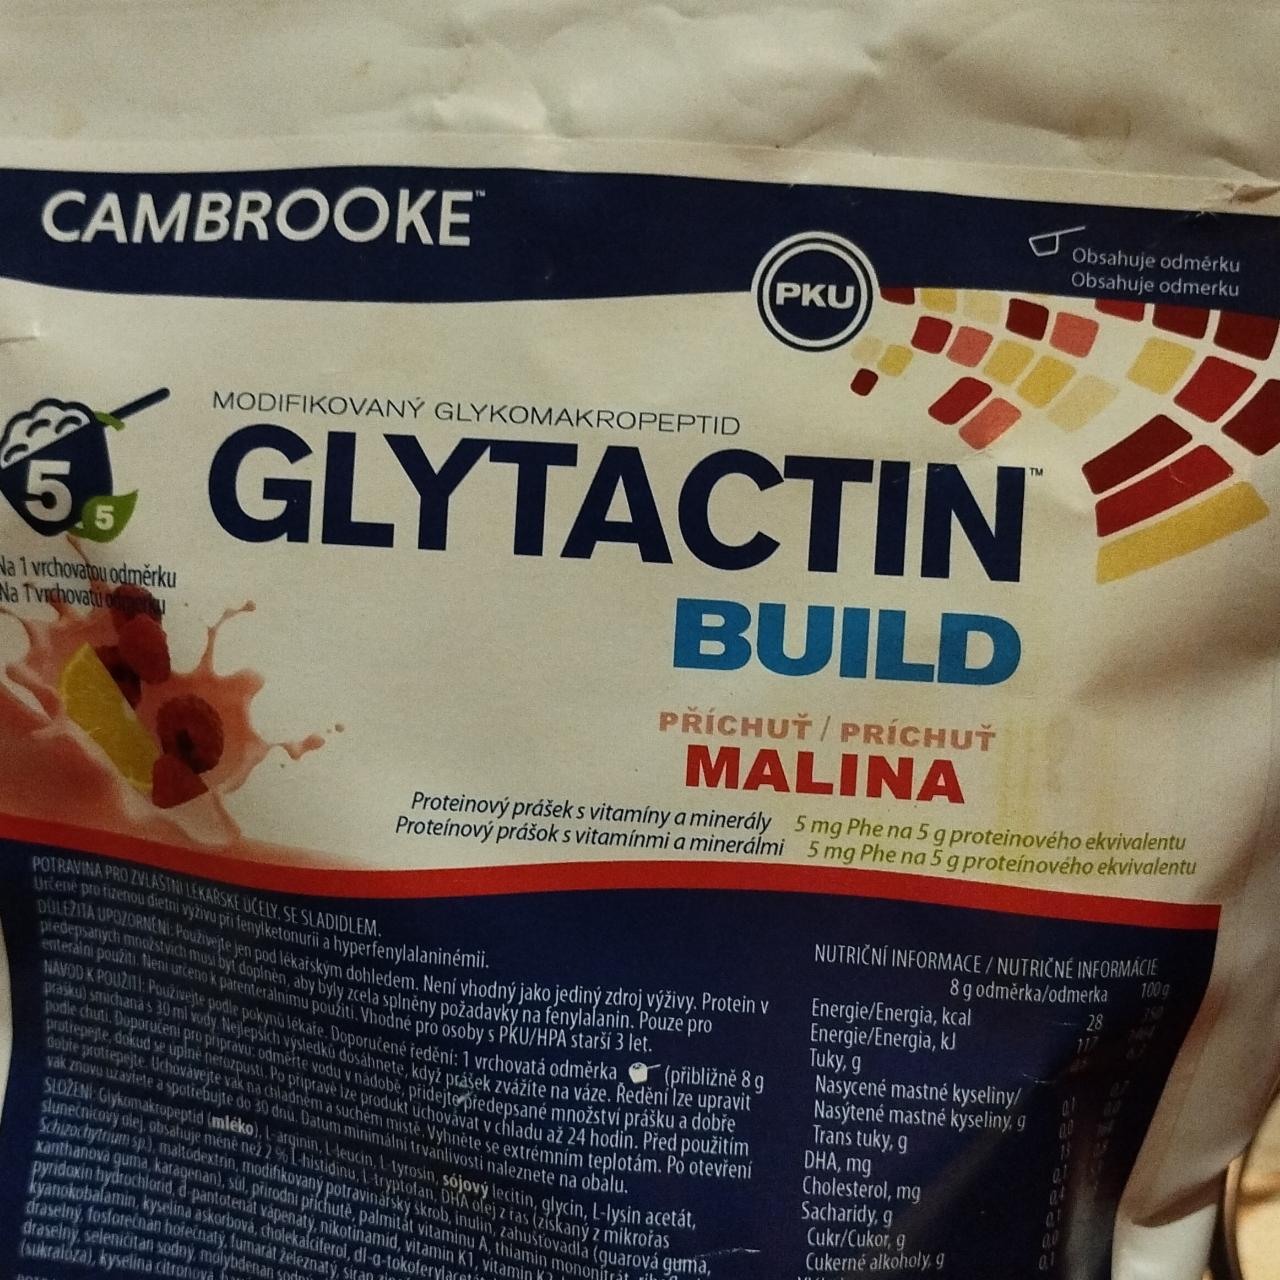 Fotografie - Glytactin Build Malina Cambrooke